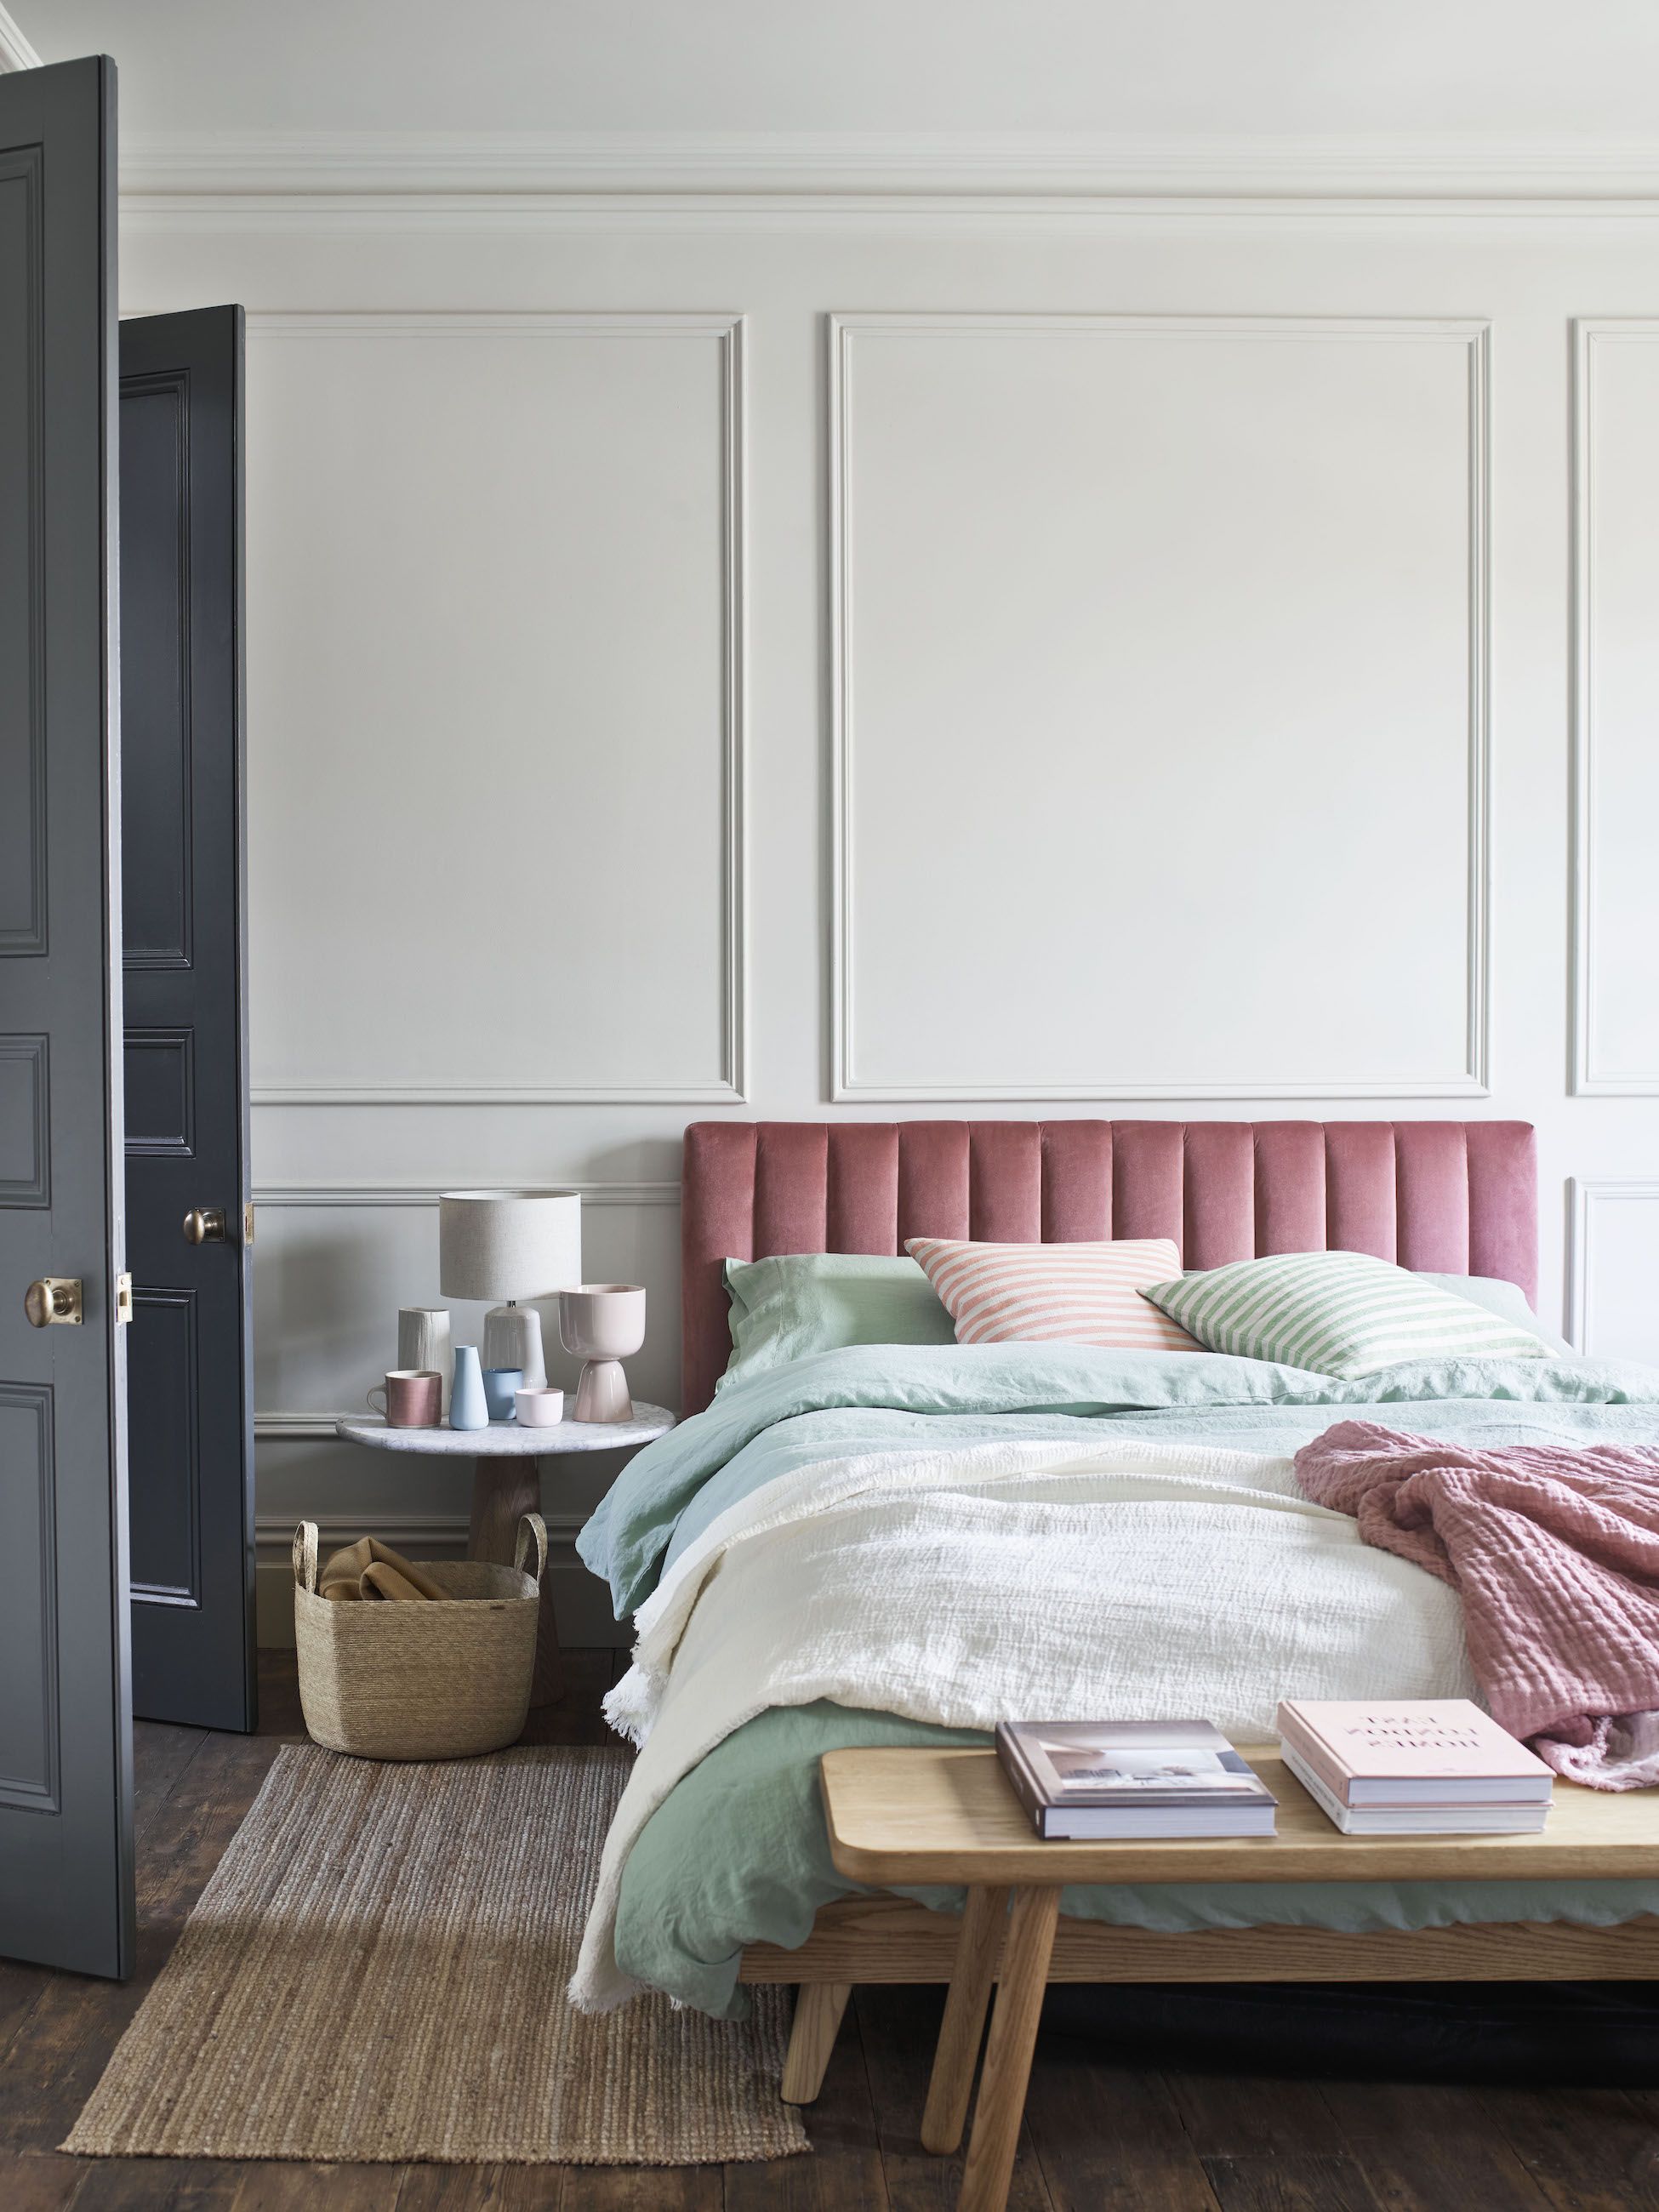 15 Beautiful Bedroom Ideas - Bedroom Decor Ideas